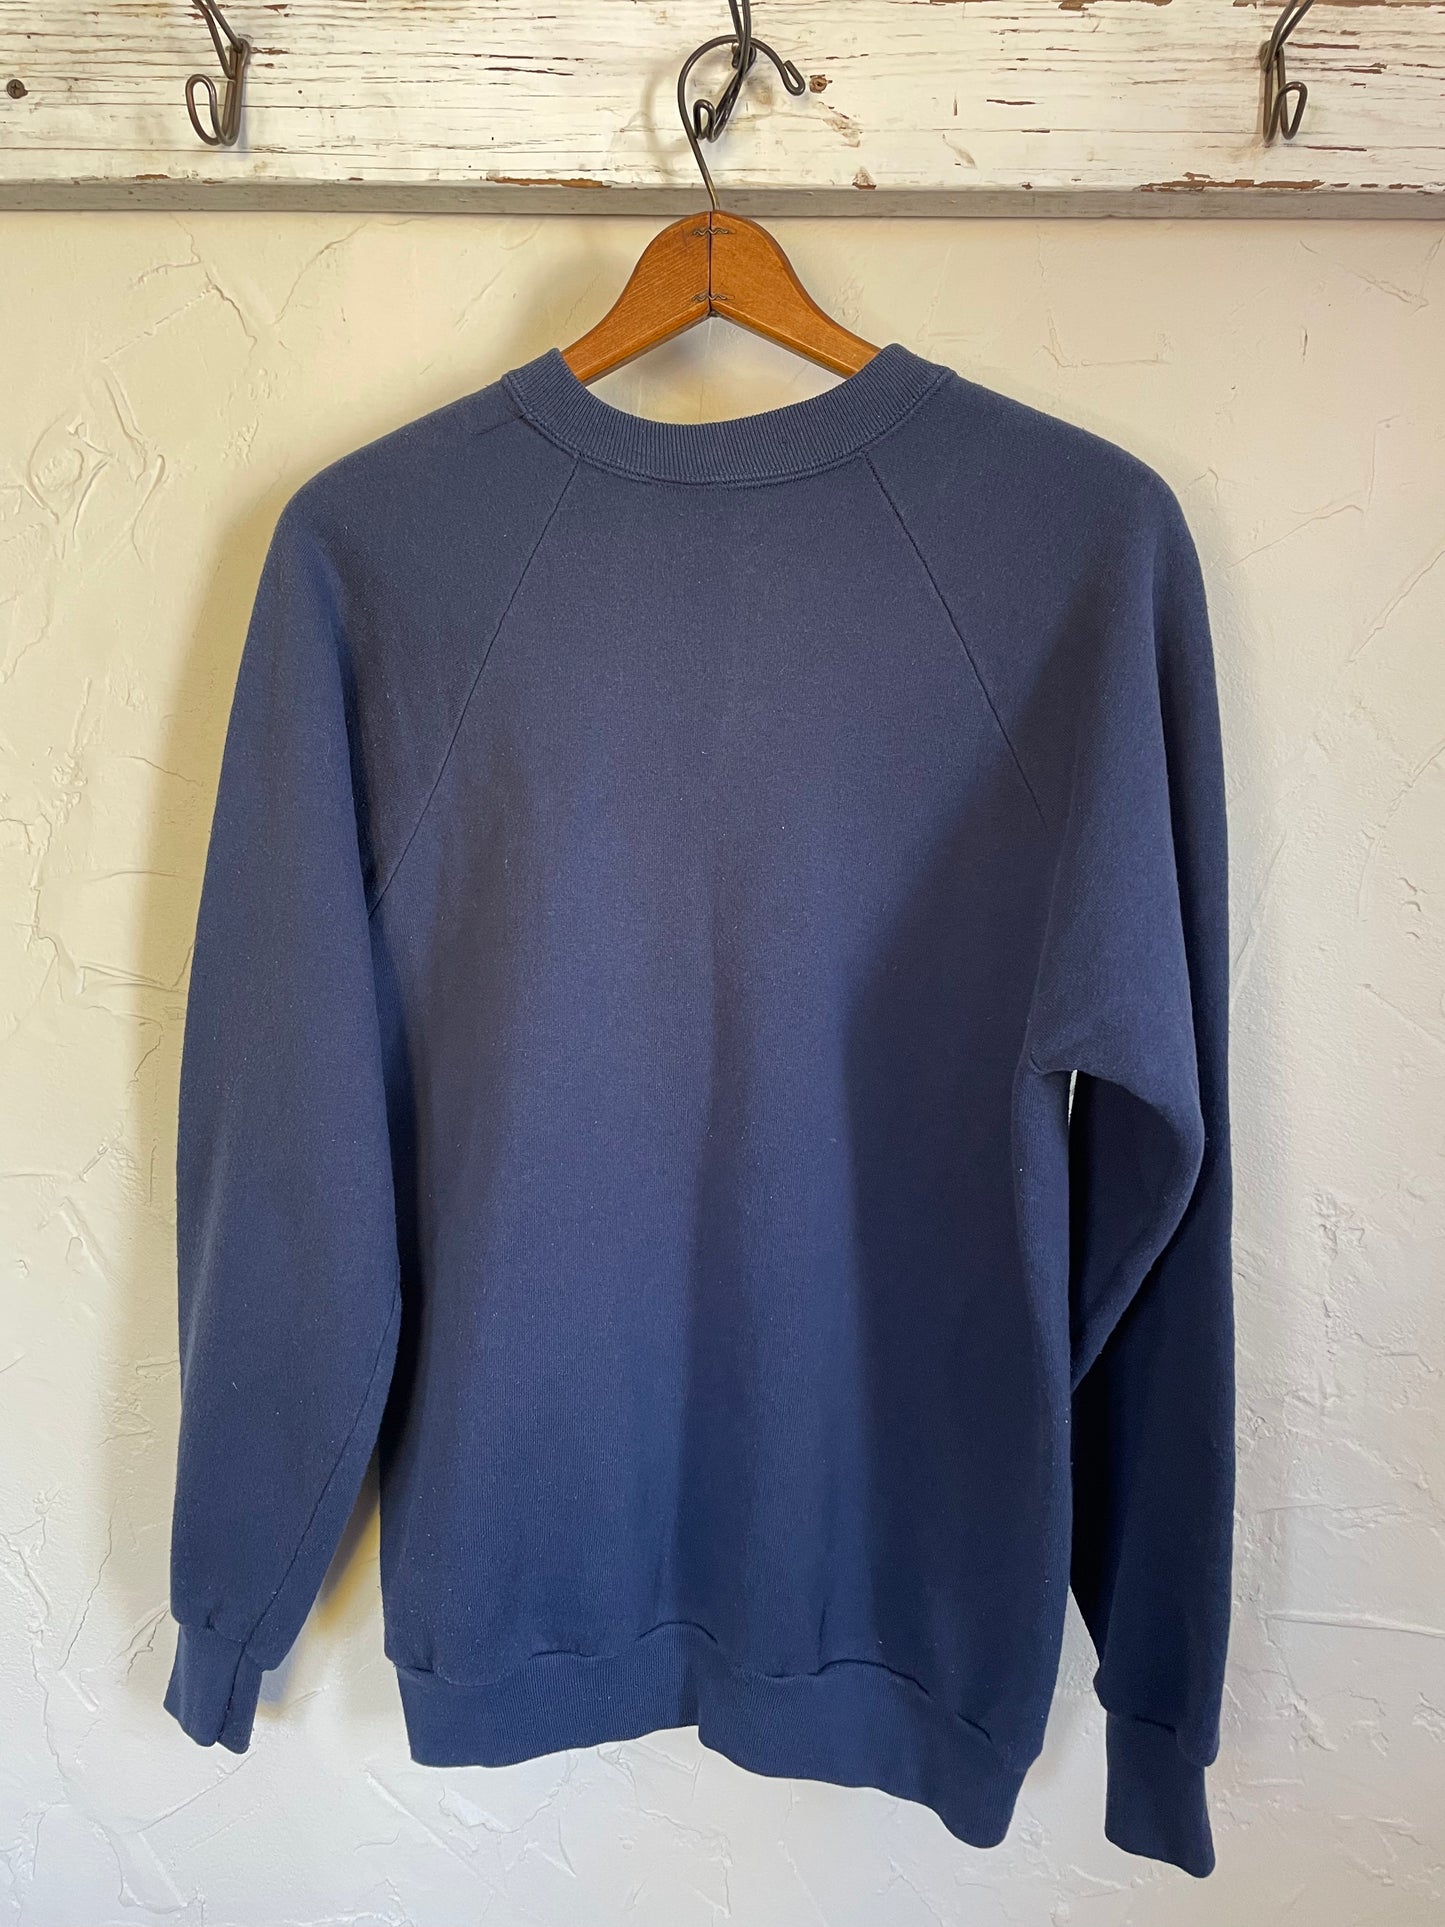 80s/90s Blank Navy Blue Sweatshirt